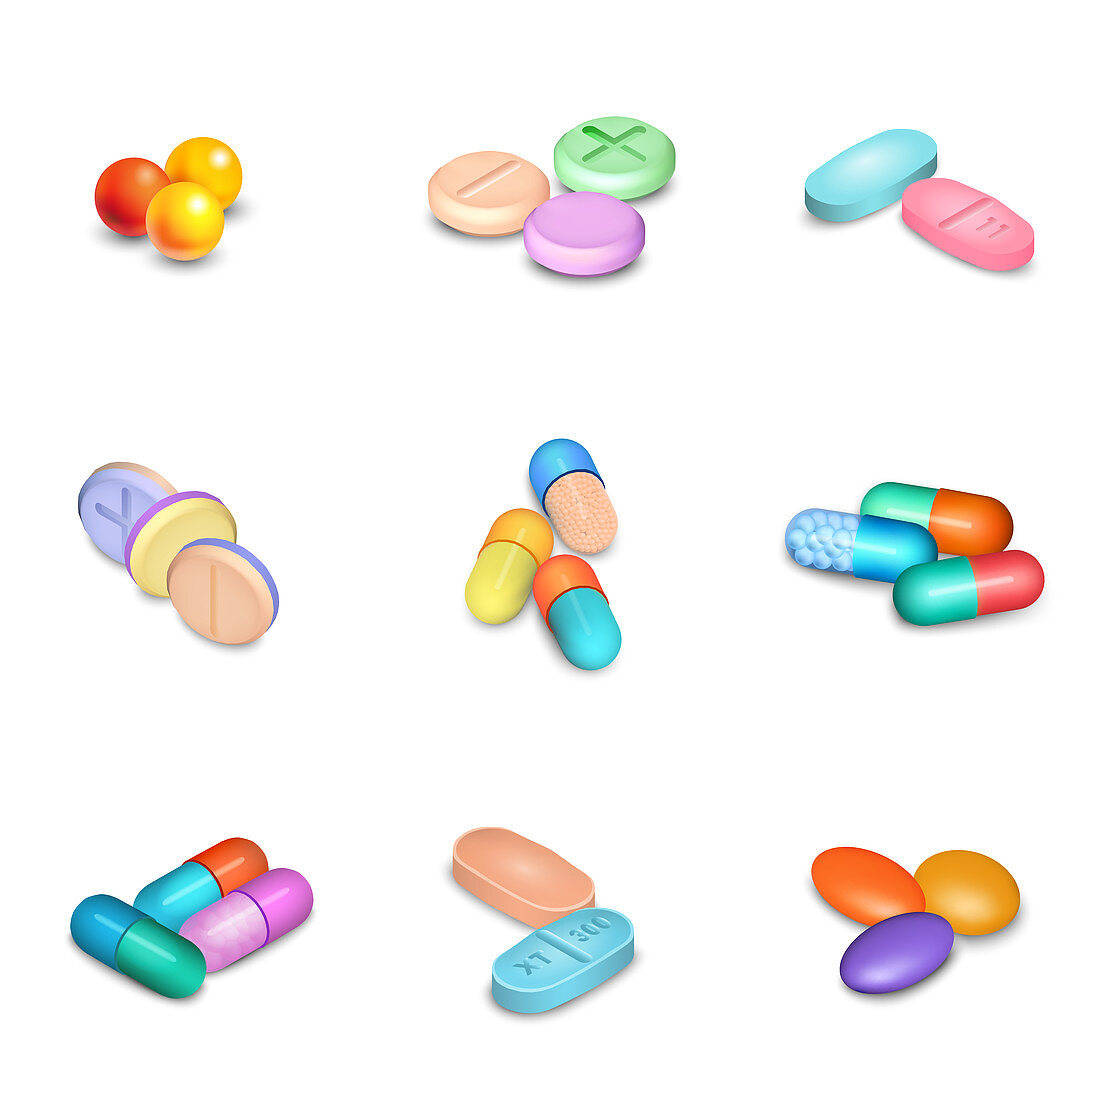 Pills, illustration